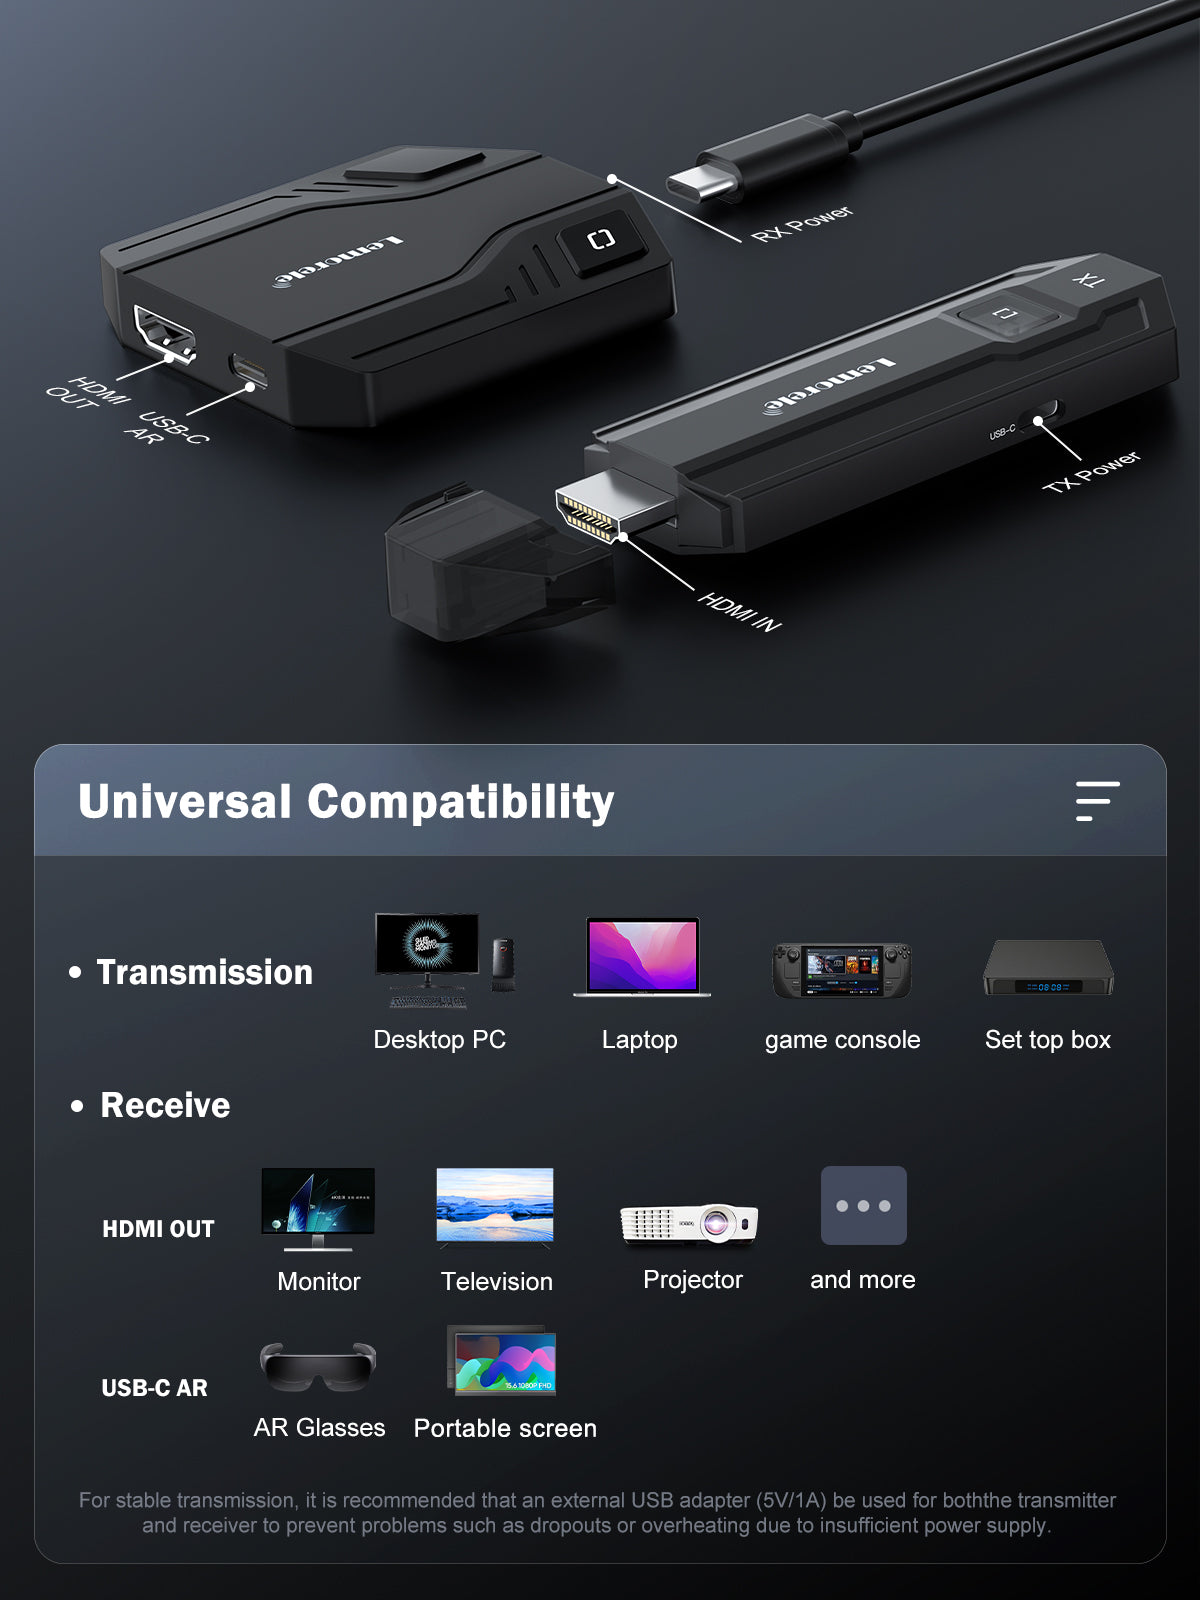 Lemorele Portable Wireless HDMI VR Transmitter Kit